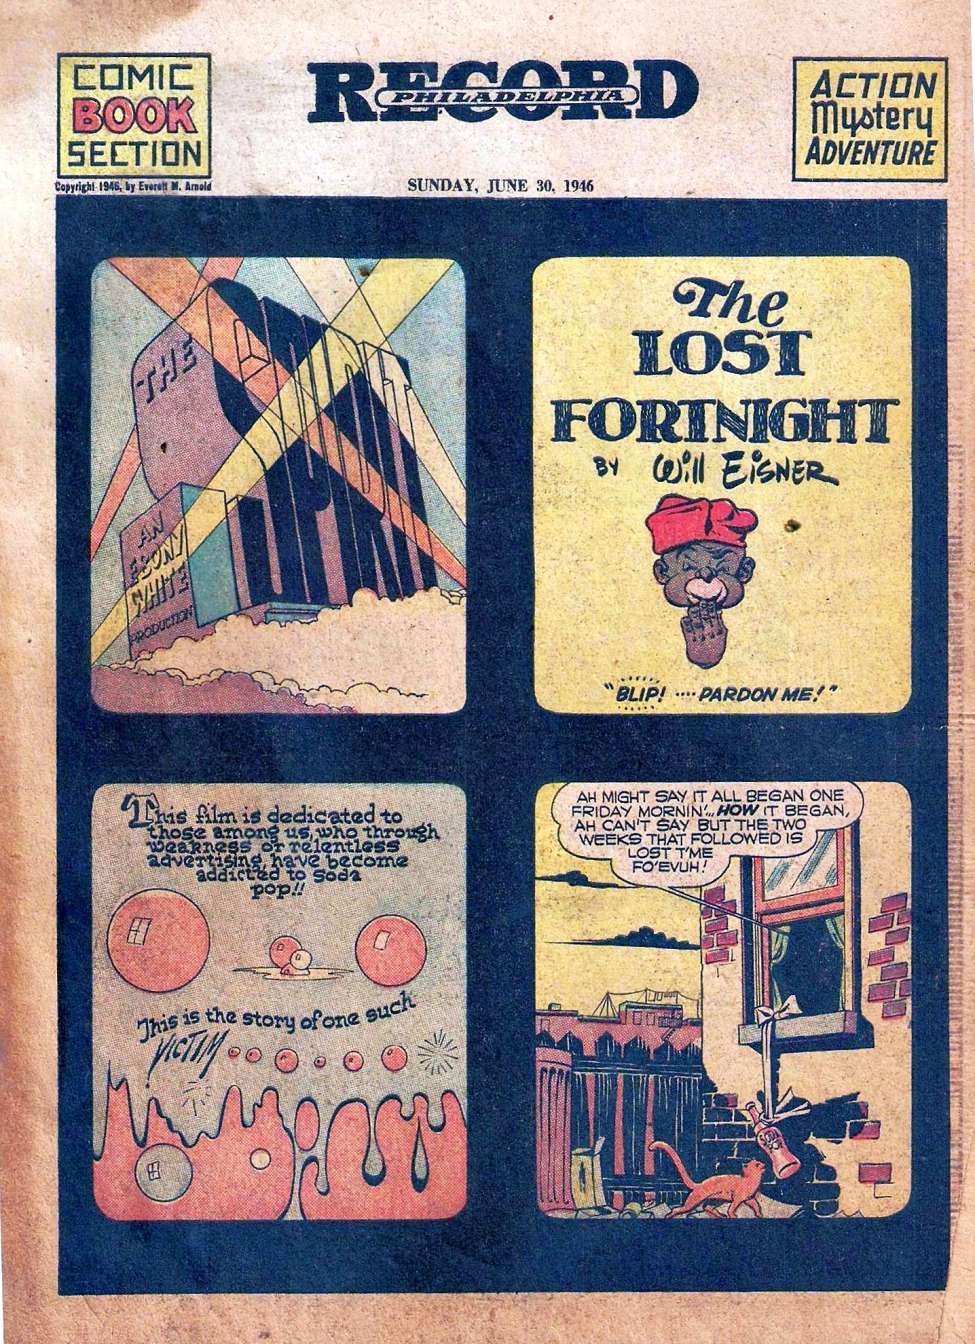 Comic Book Cover For The Spirit (1946-06-30) - Philadelphia Record - Version 2